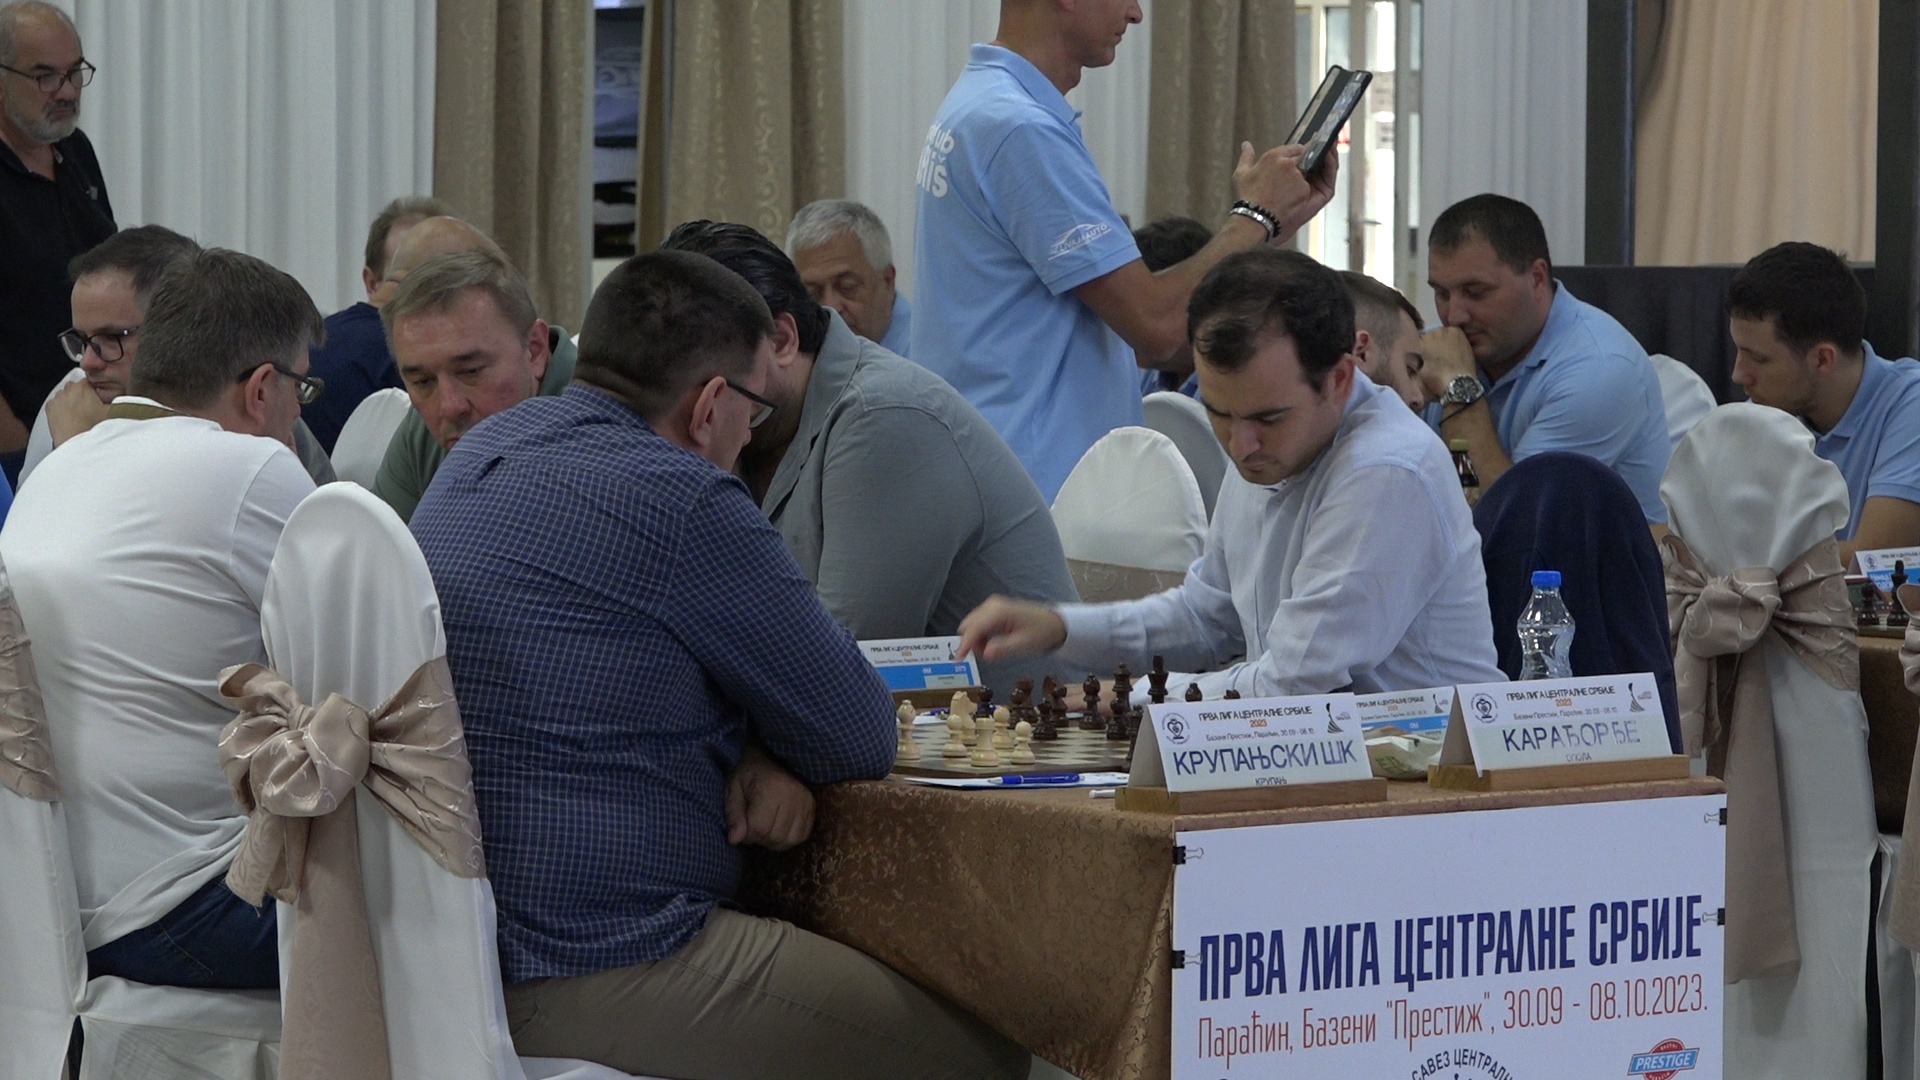 Krušik iz Valjeva pobednik  Prve šahovske lige centralne Srbije, OŠK Paraćin sedmi na ovom takmičenju